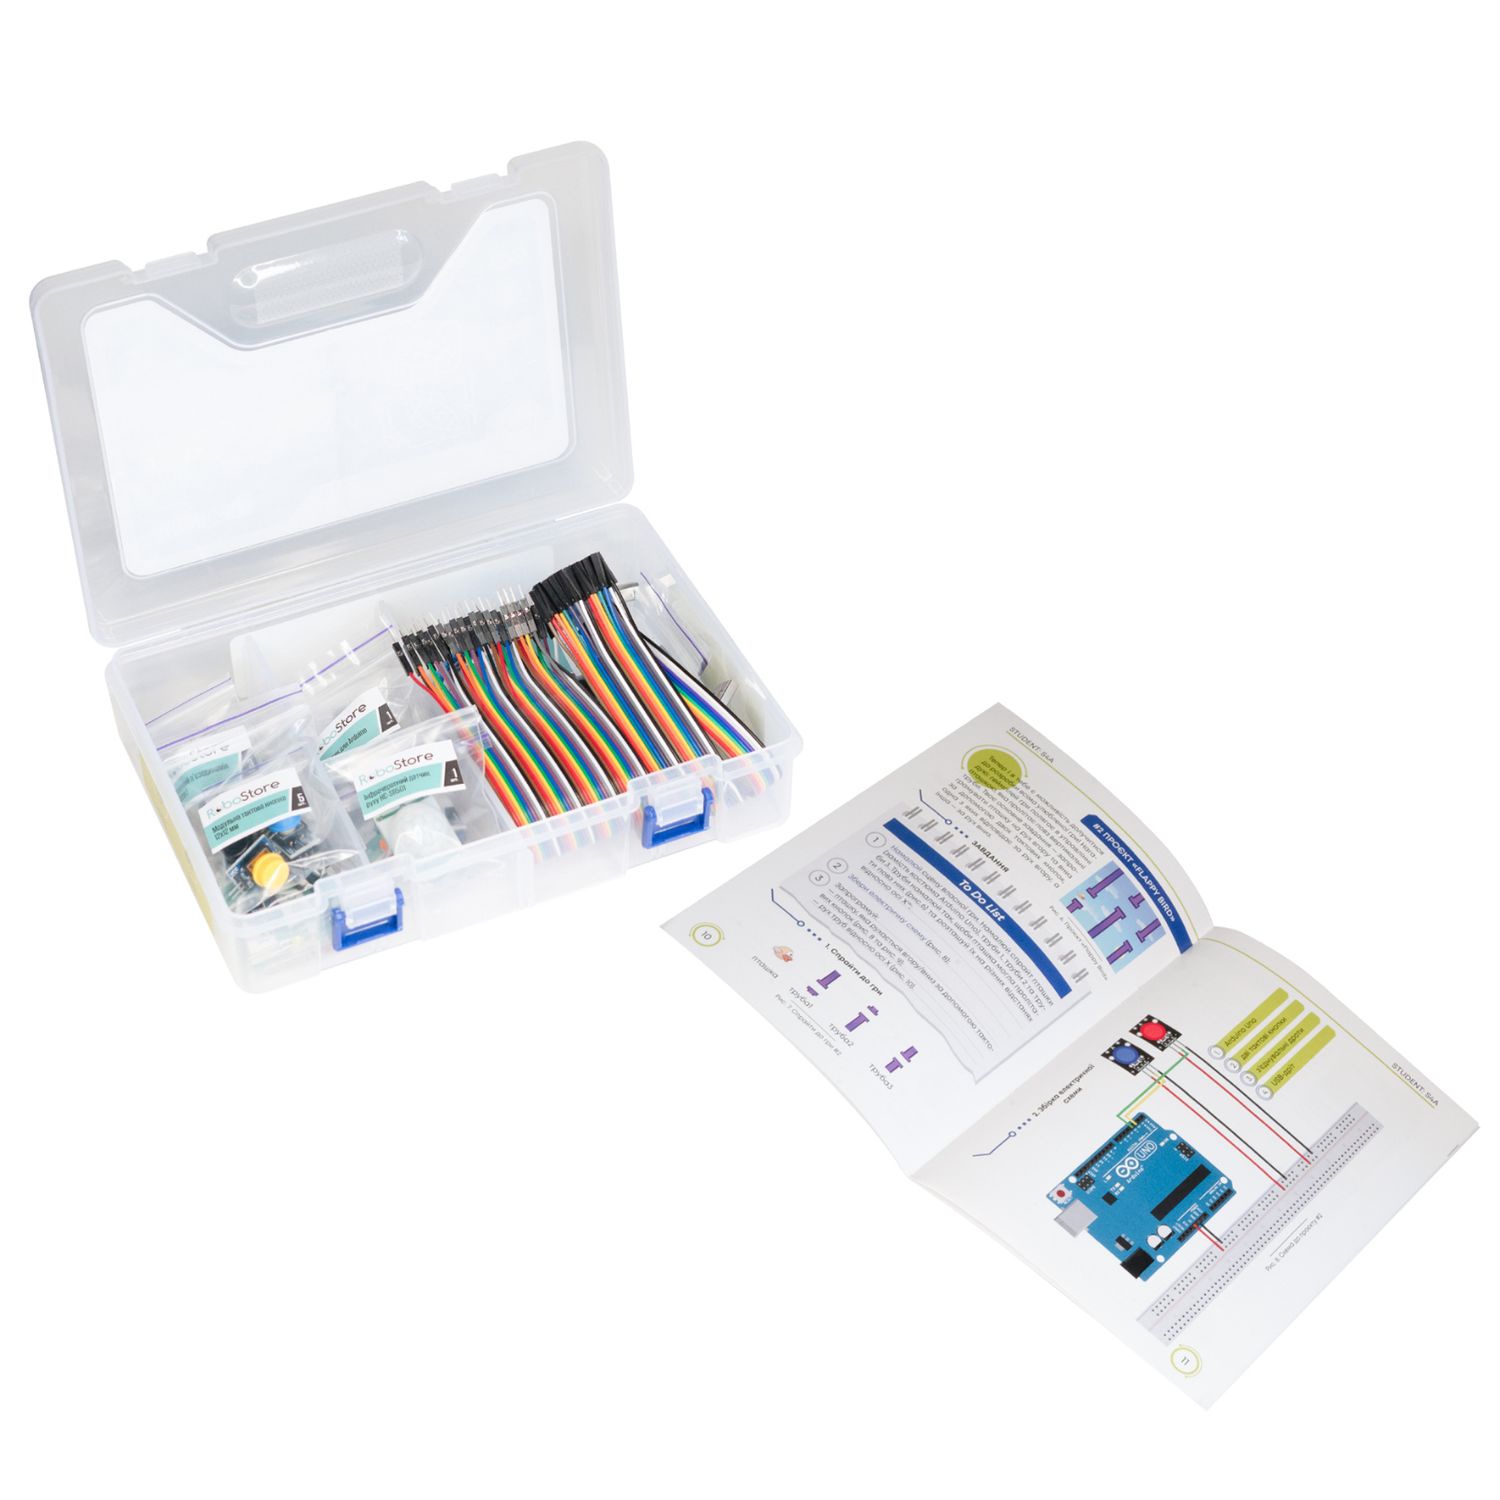 Обучающий набор электроники "Student" Arduino Starter Kit на базе Uno R3 (7 проектов) в кейсе